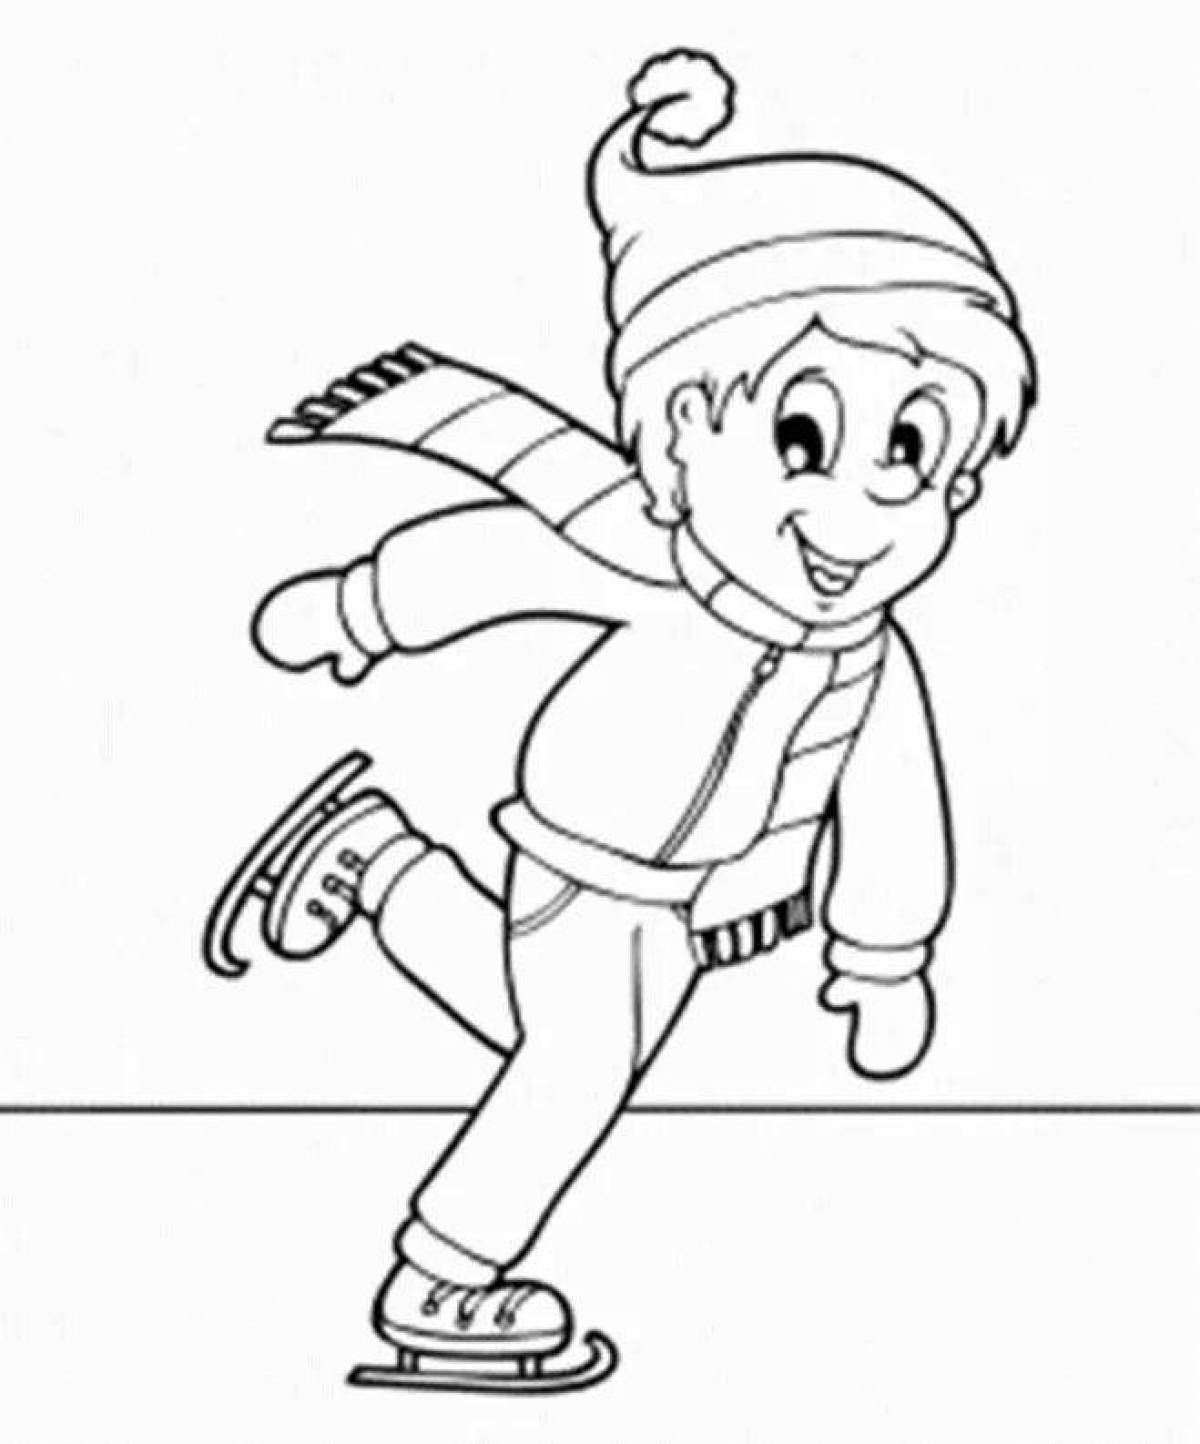 An animated skating coloring page